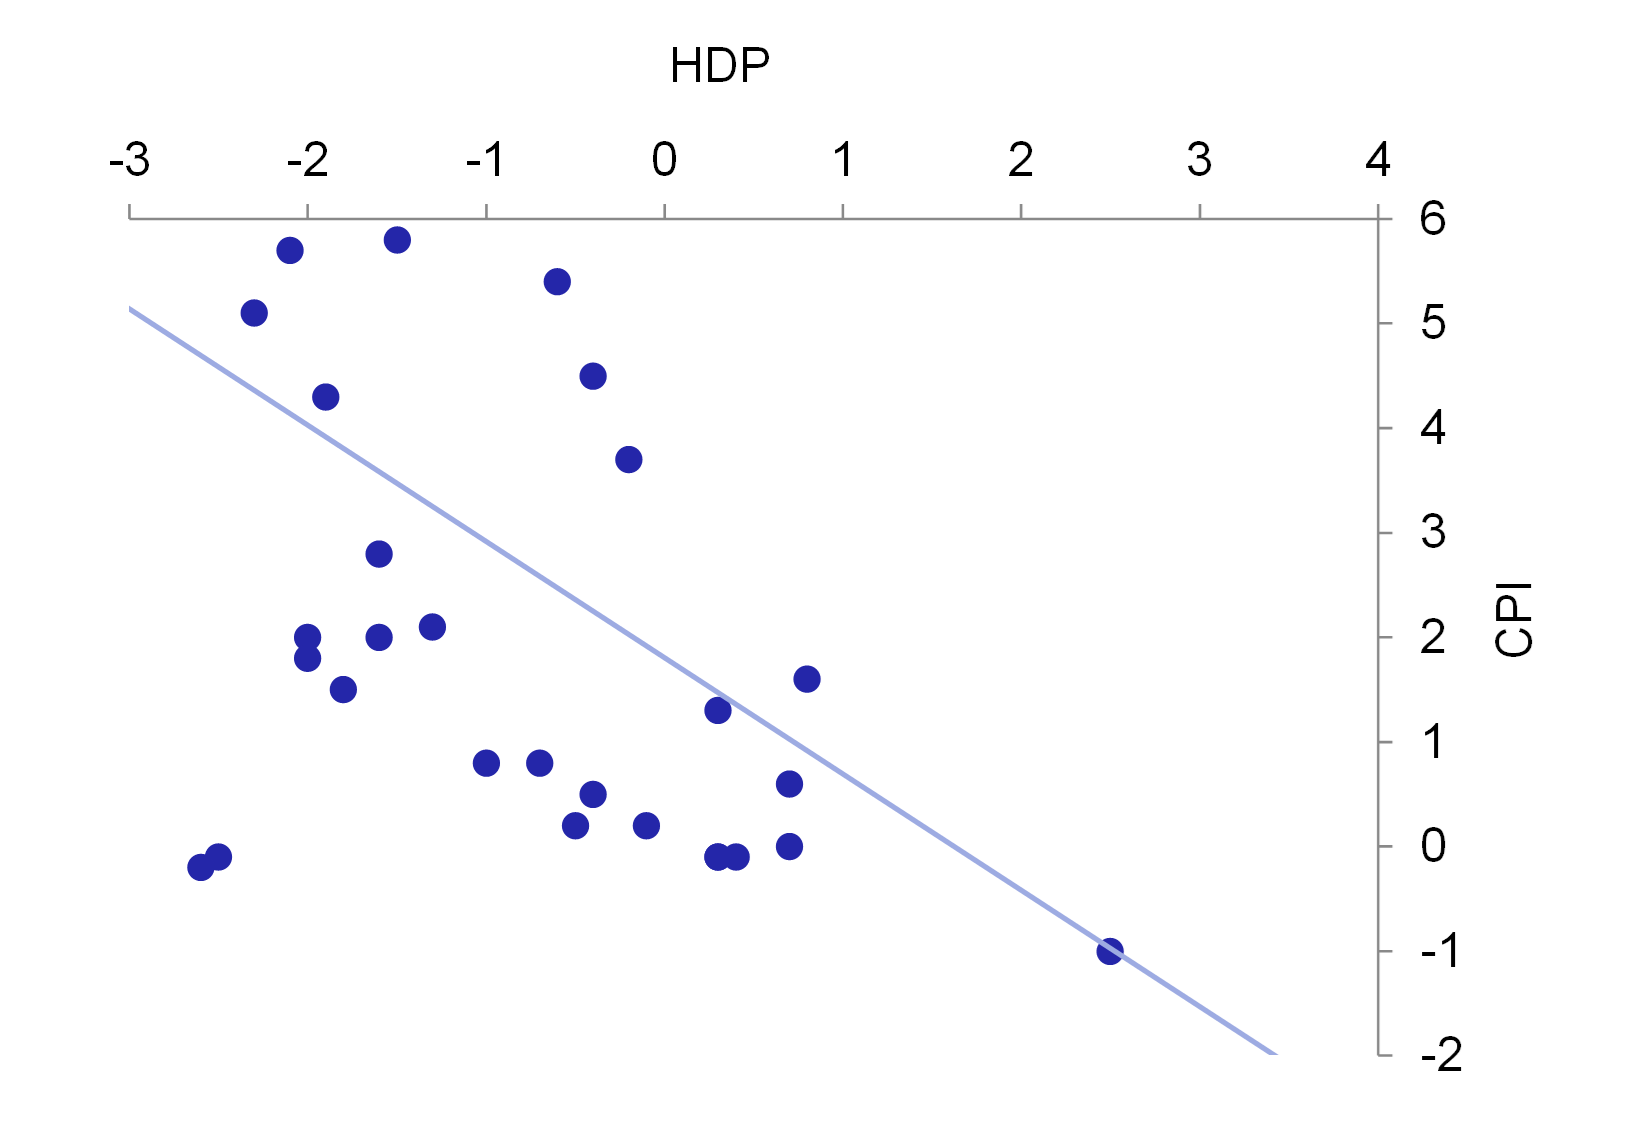 Graf 3 – Vztah mezi odchylkami HDP a CPI